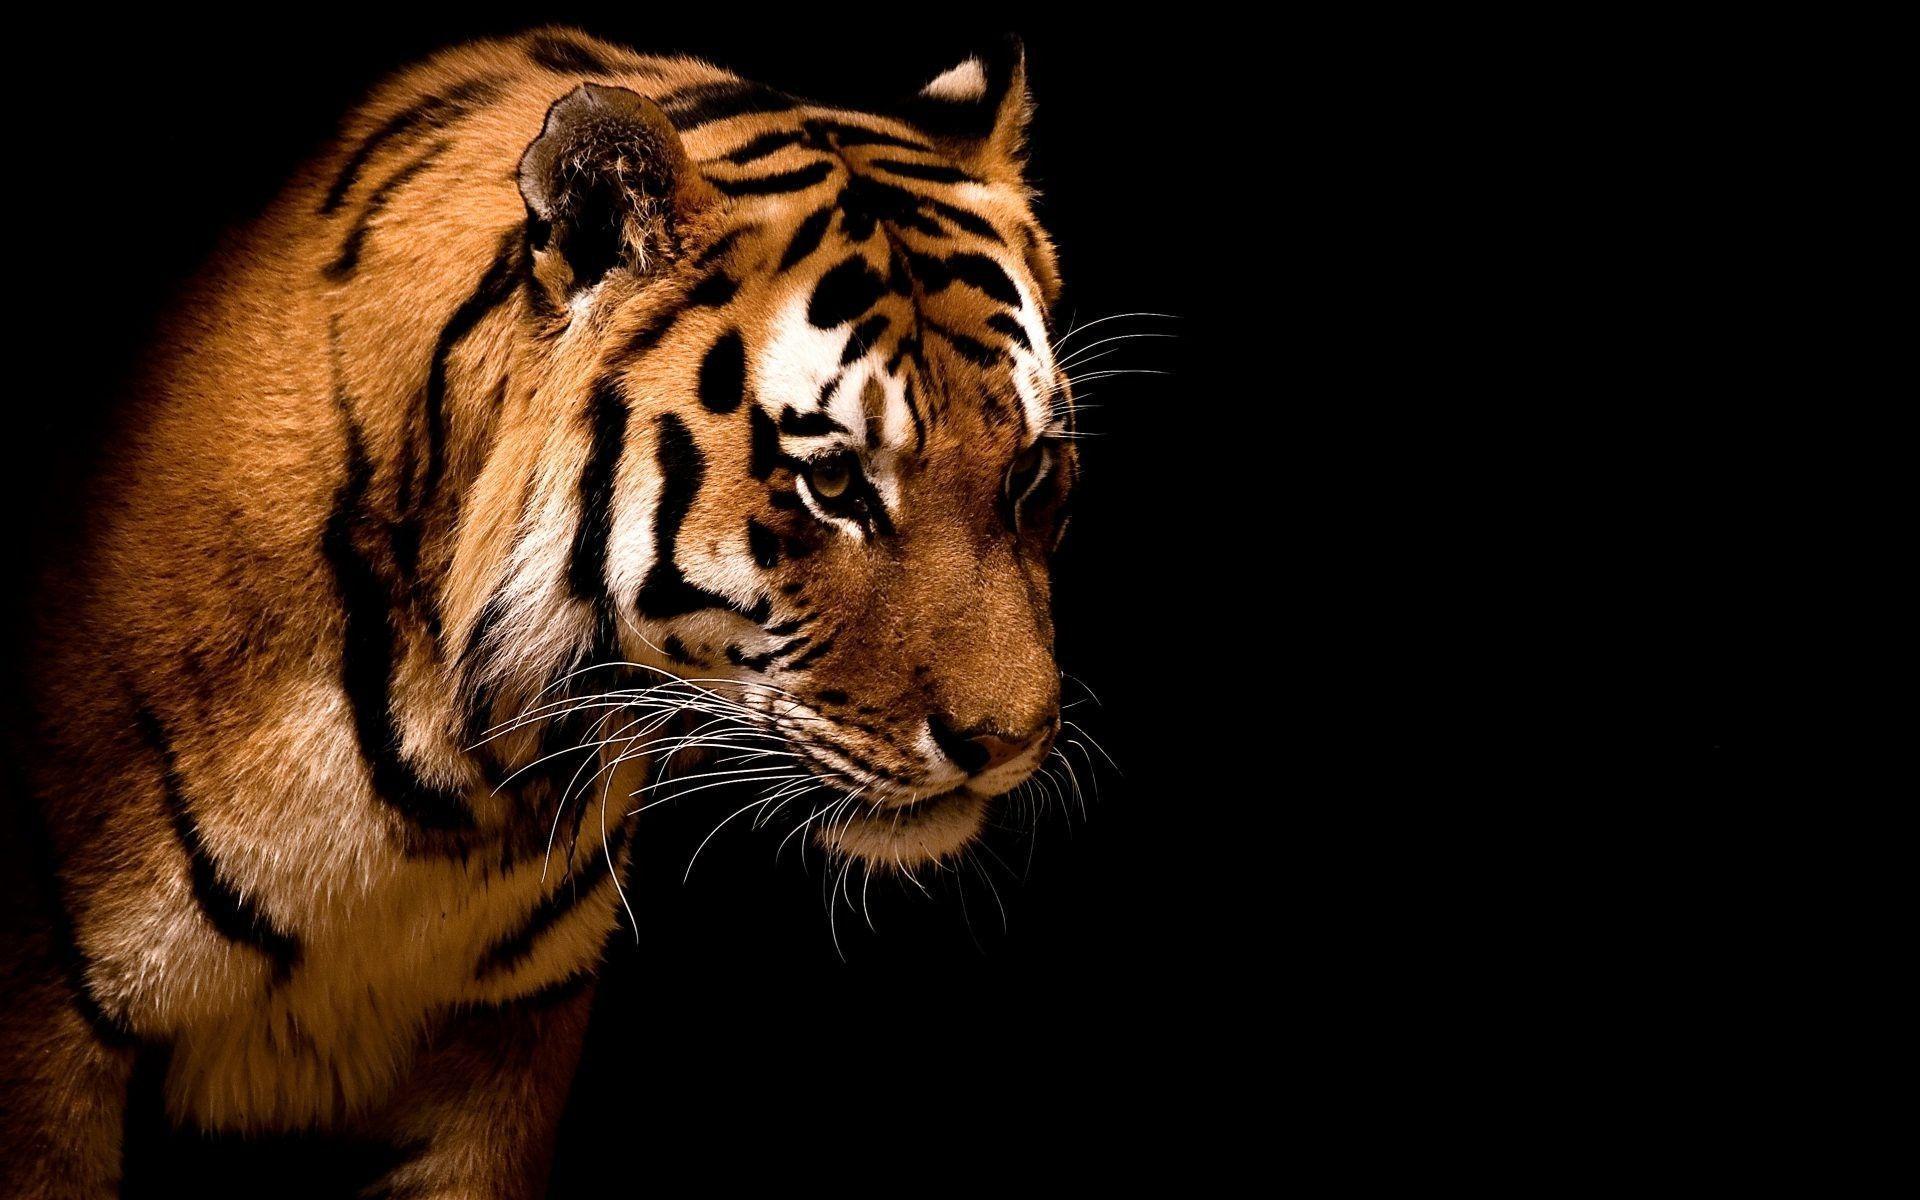 Samaritan Tiger Isolated on Black background Free